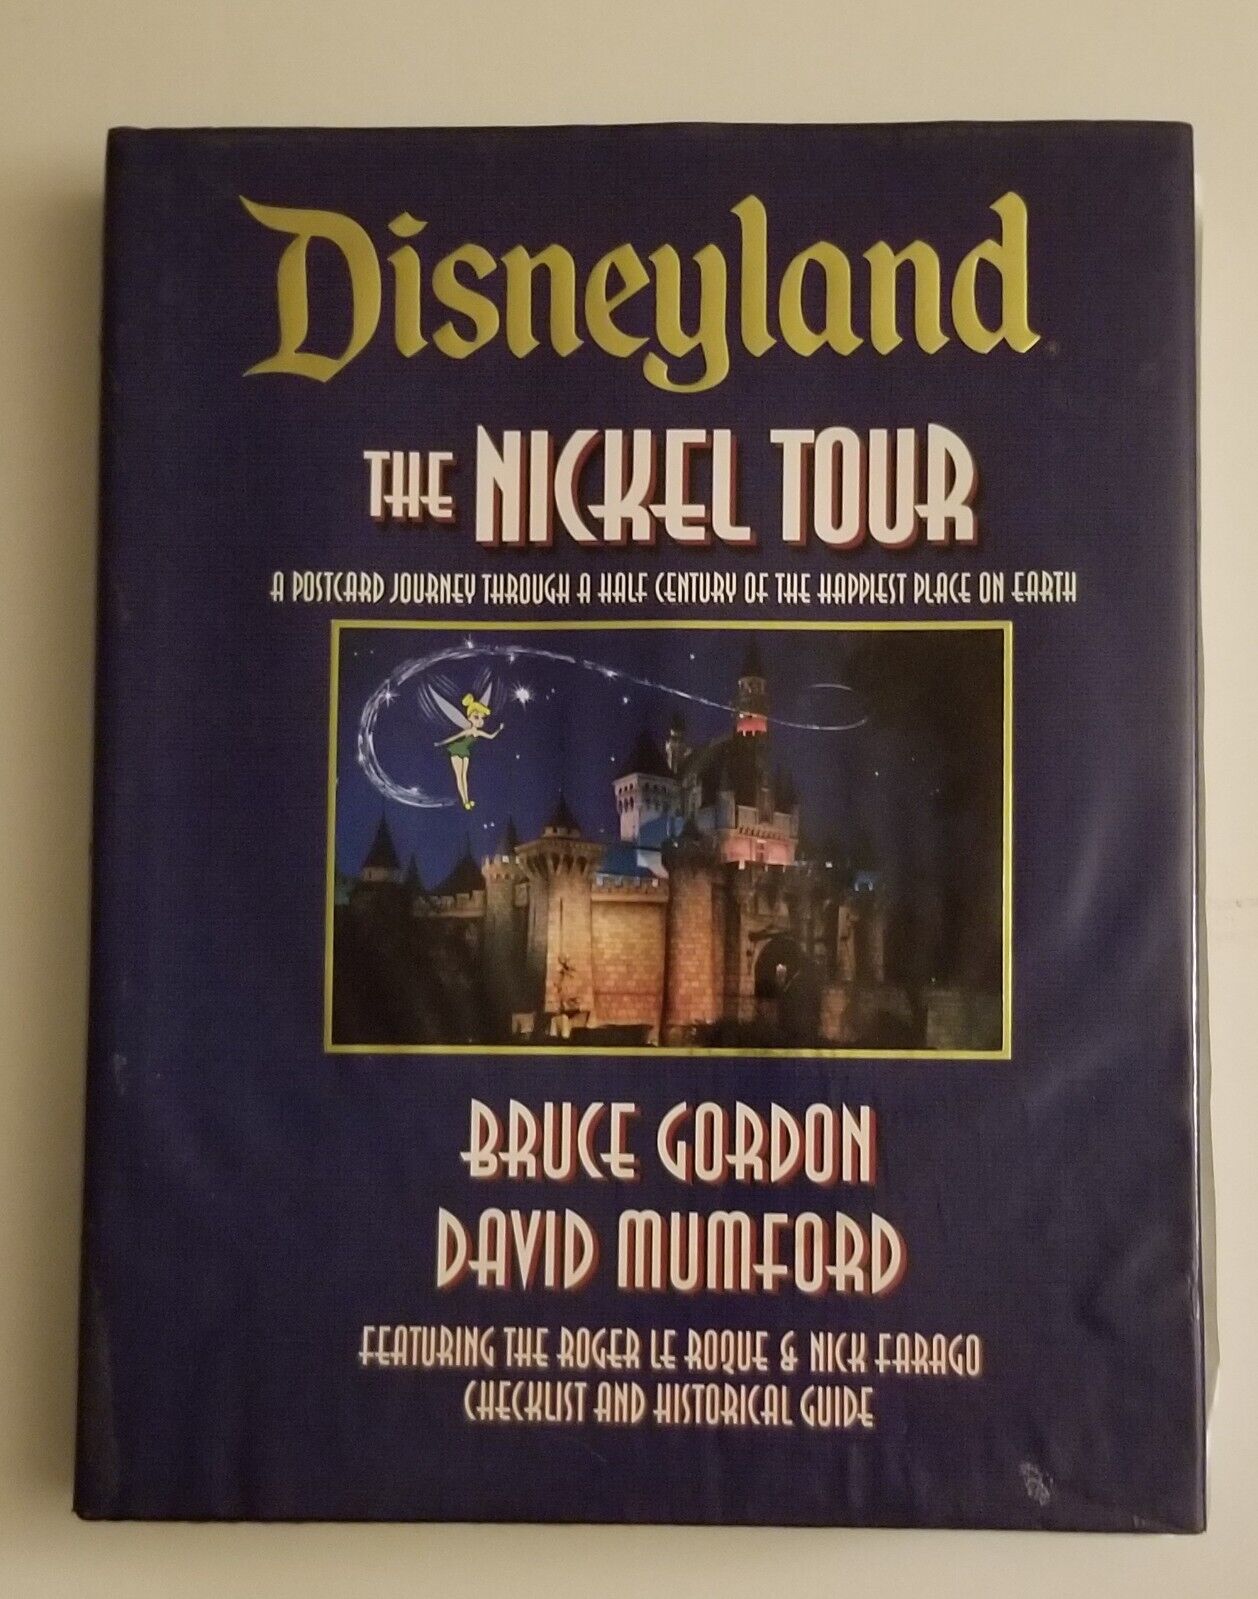 Disneyland The Nickel Tour Book, Signed 